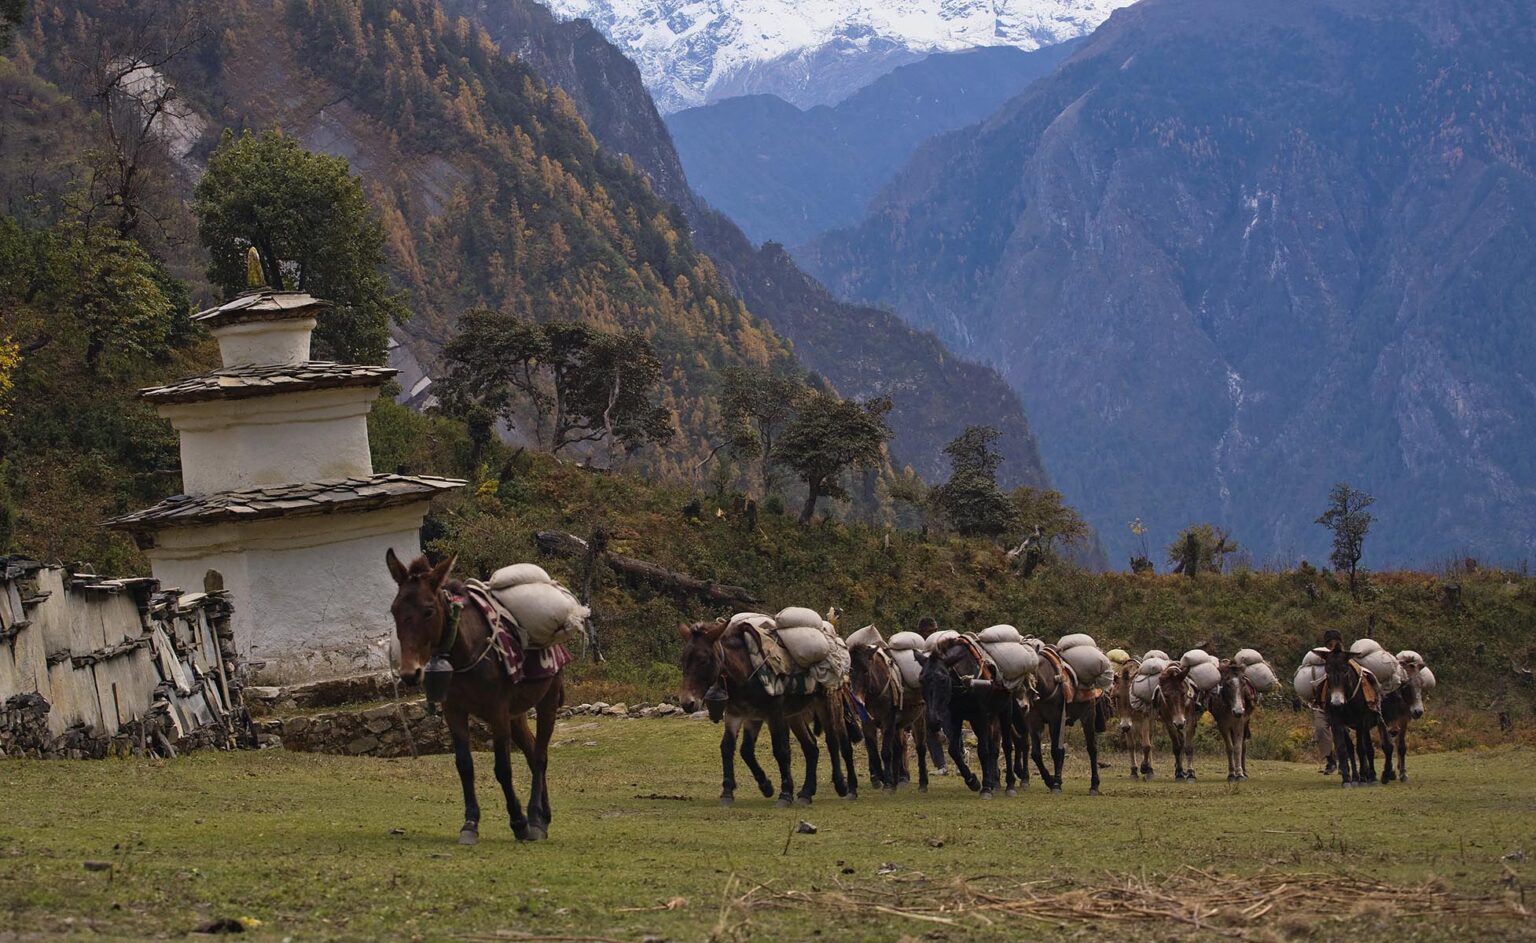 MULES haul supplies to a remote TIBETAN BUDDHIST MONASTERY - NEPAL